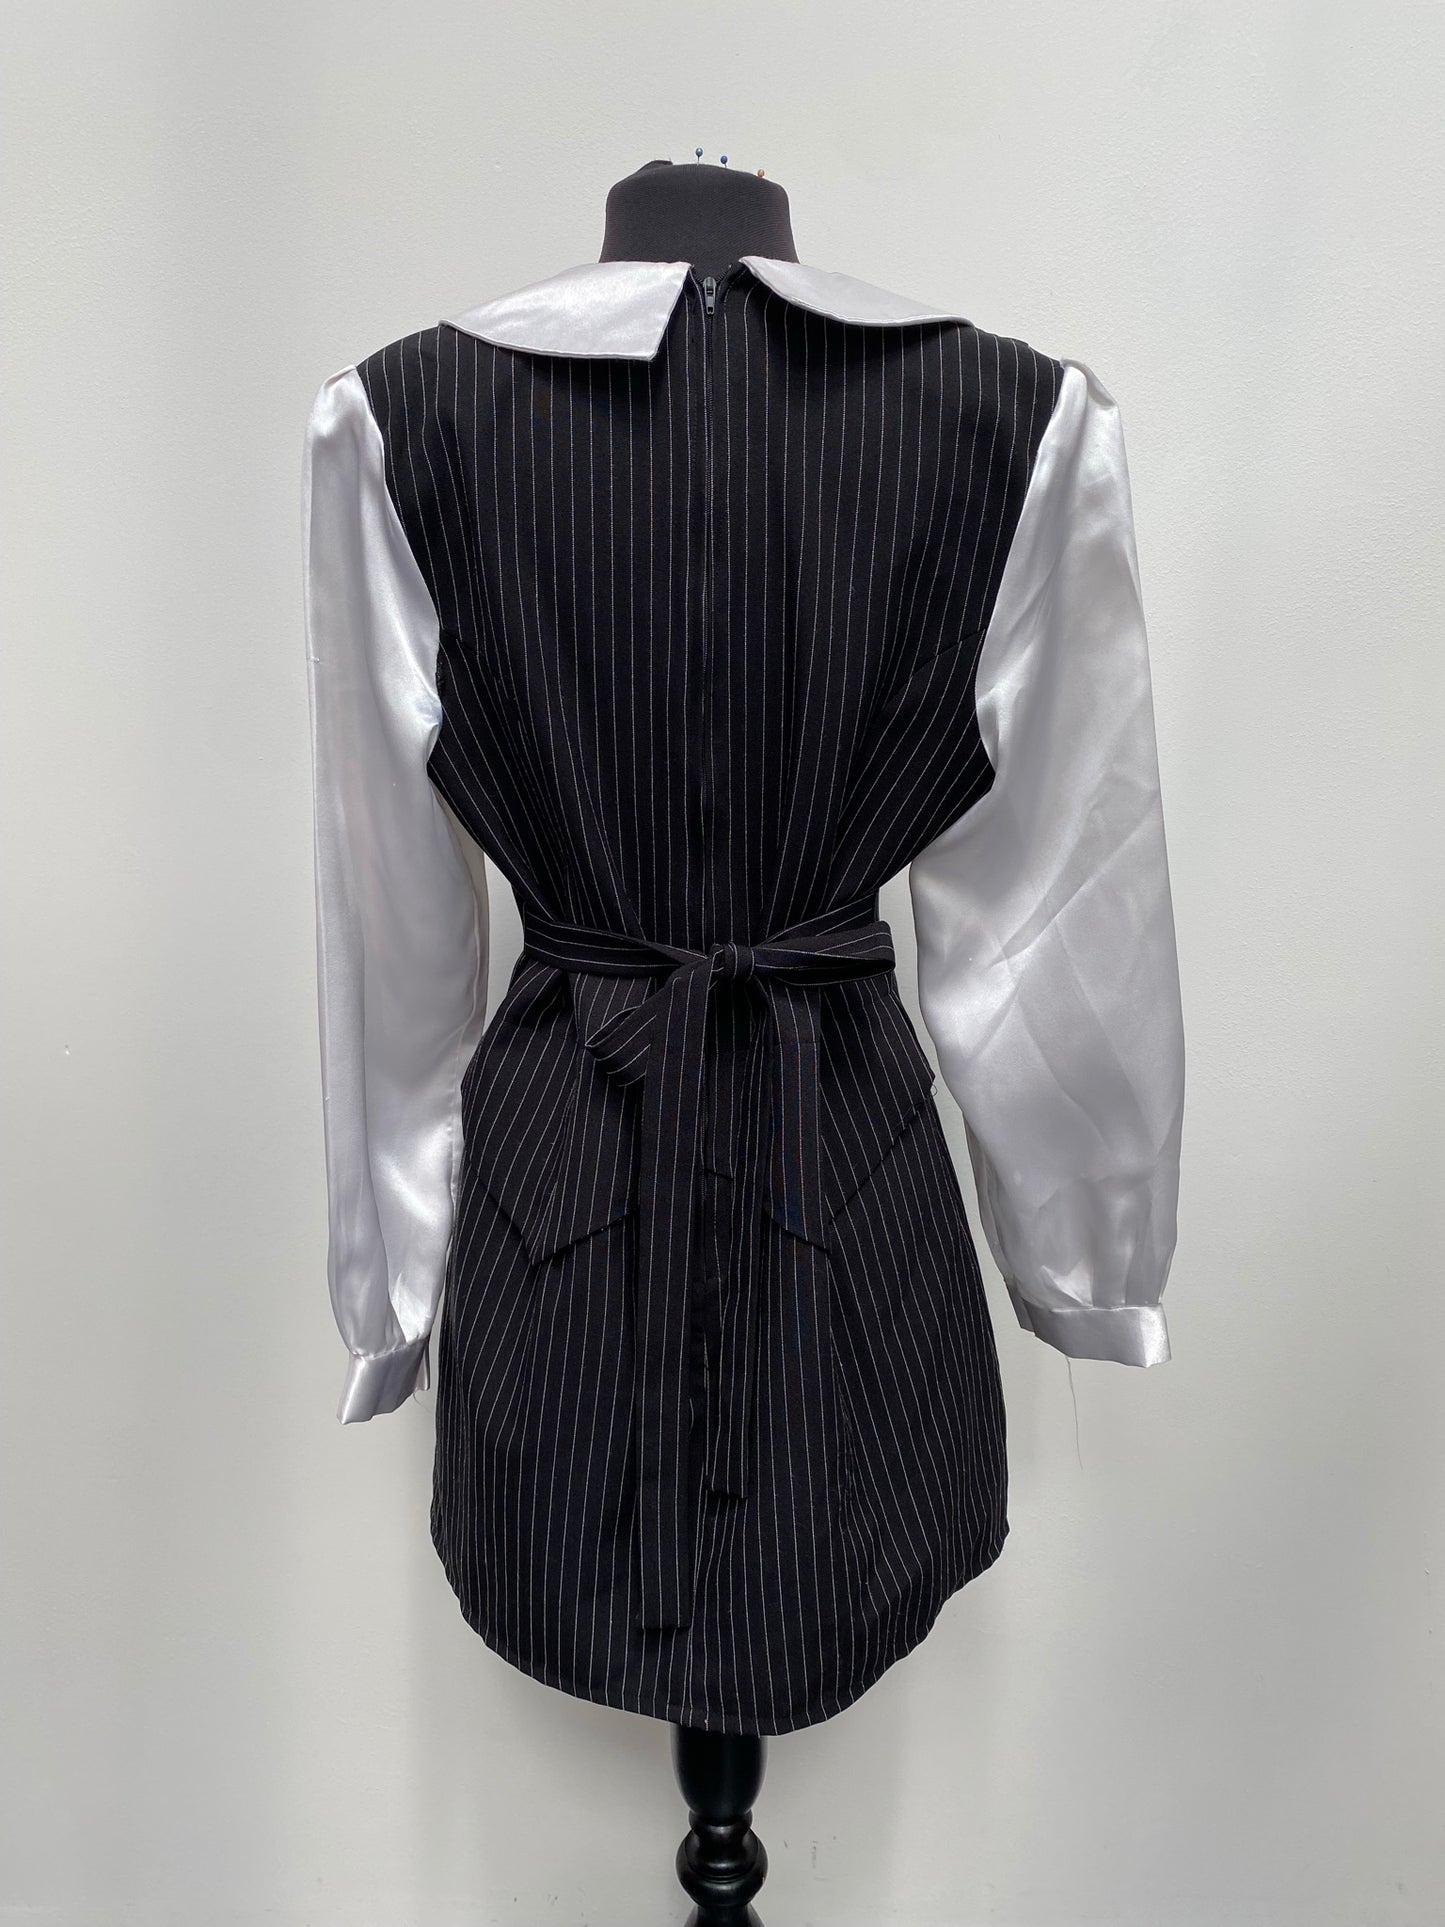 1920s Style Ladies Black Pinstripe Gangster Costume EUR40 UK 12 - Ex Hire Fancy Dress Costumes